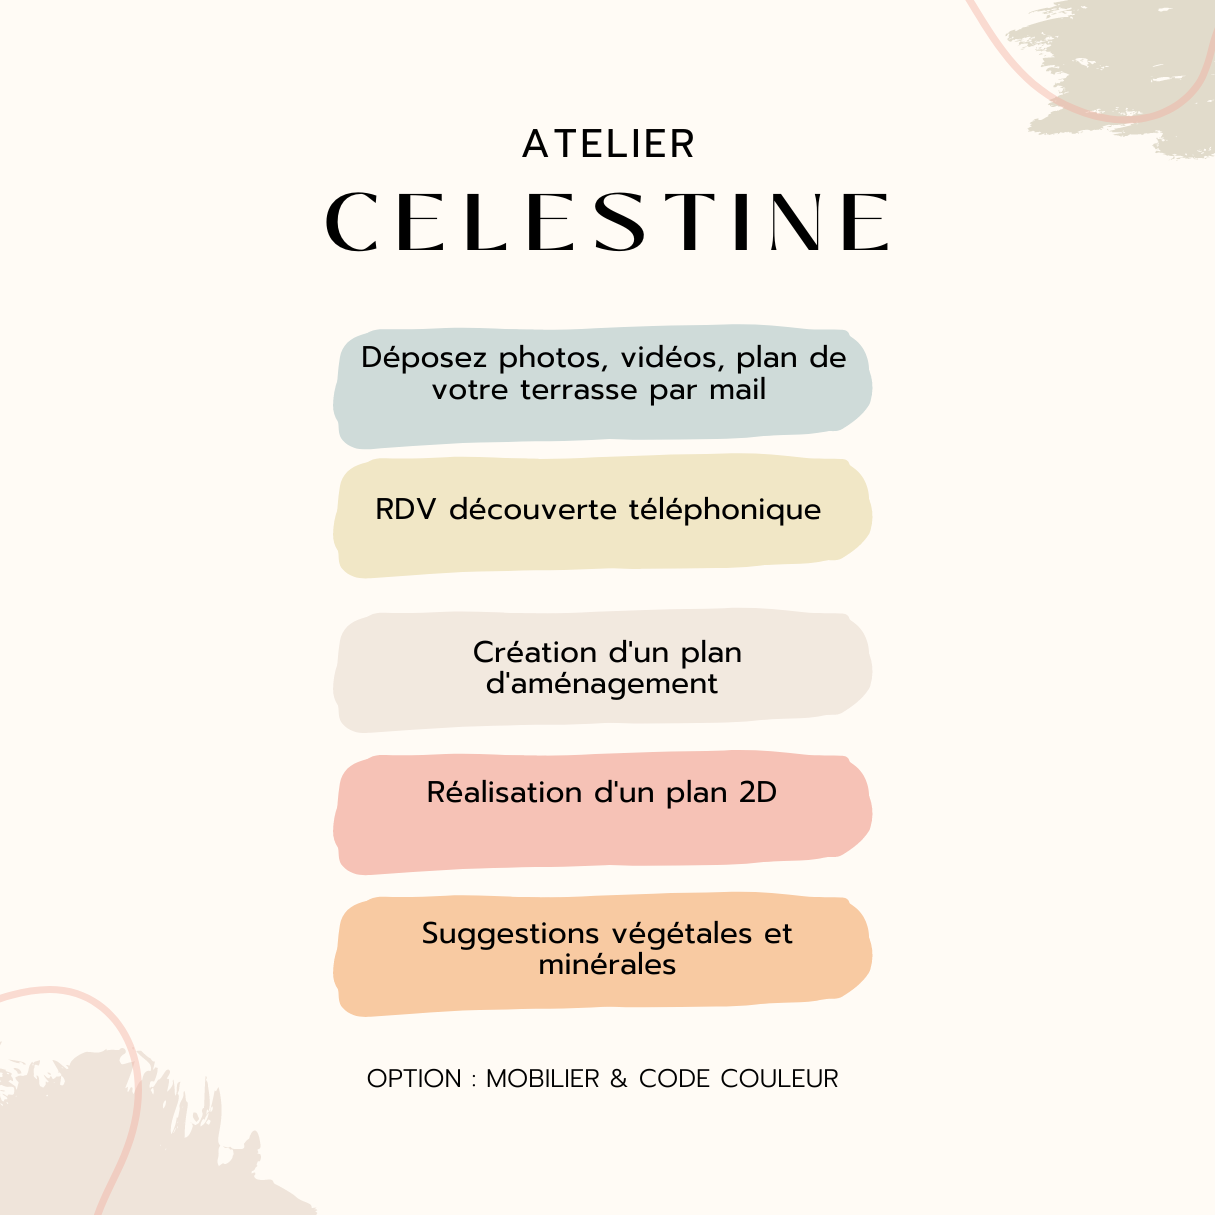 Atelier Celestine